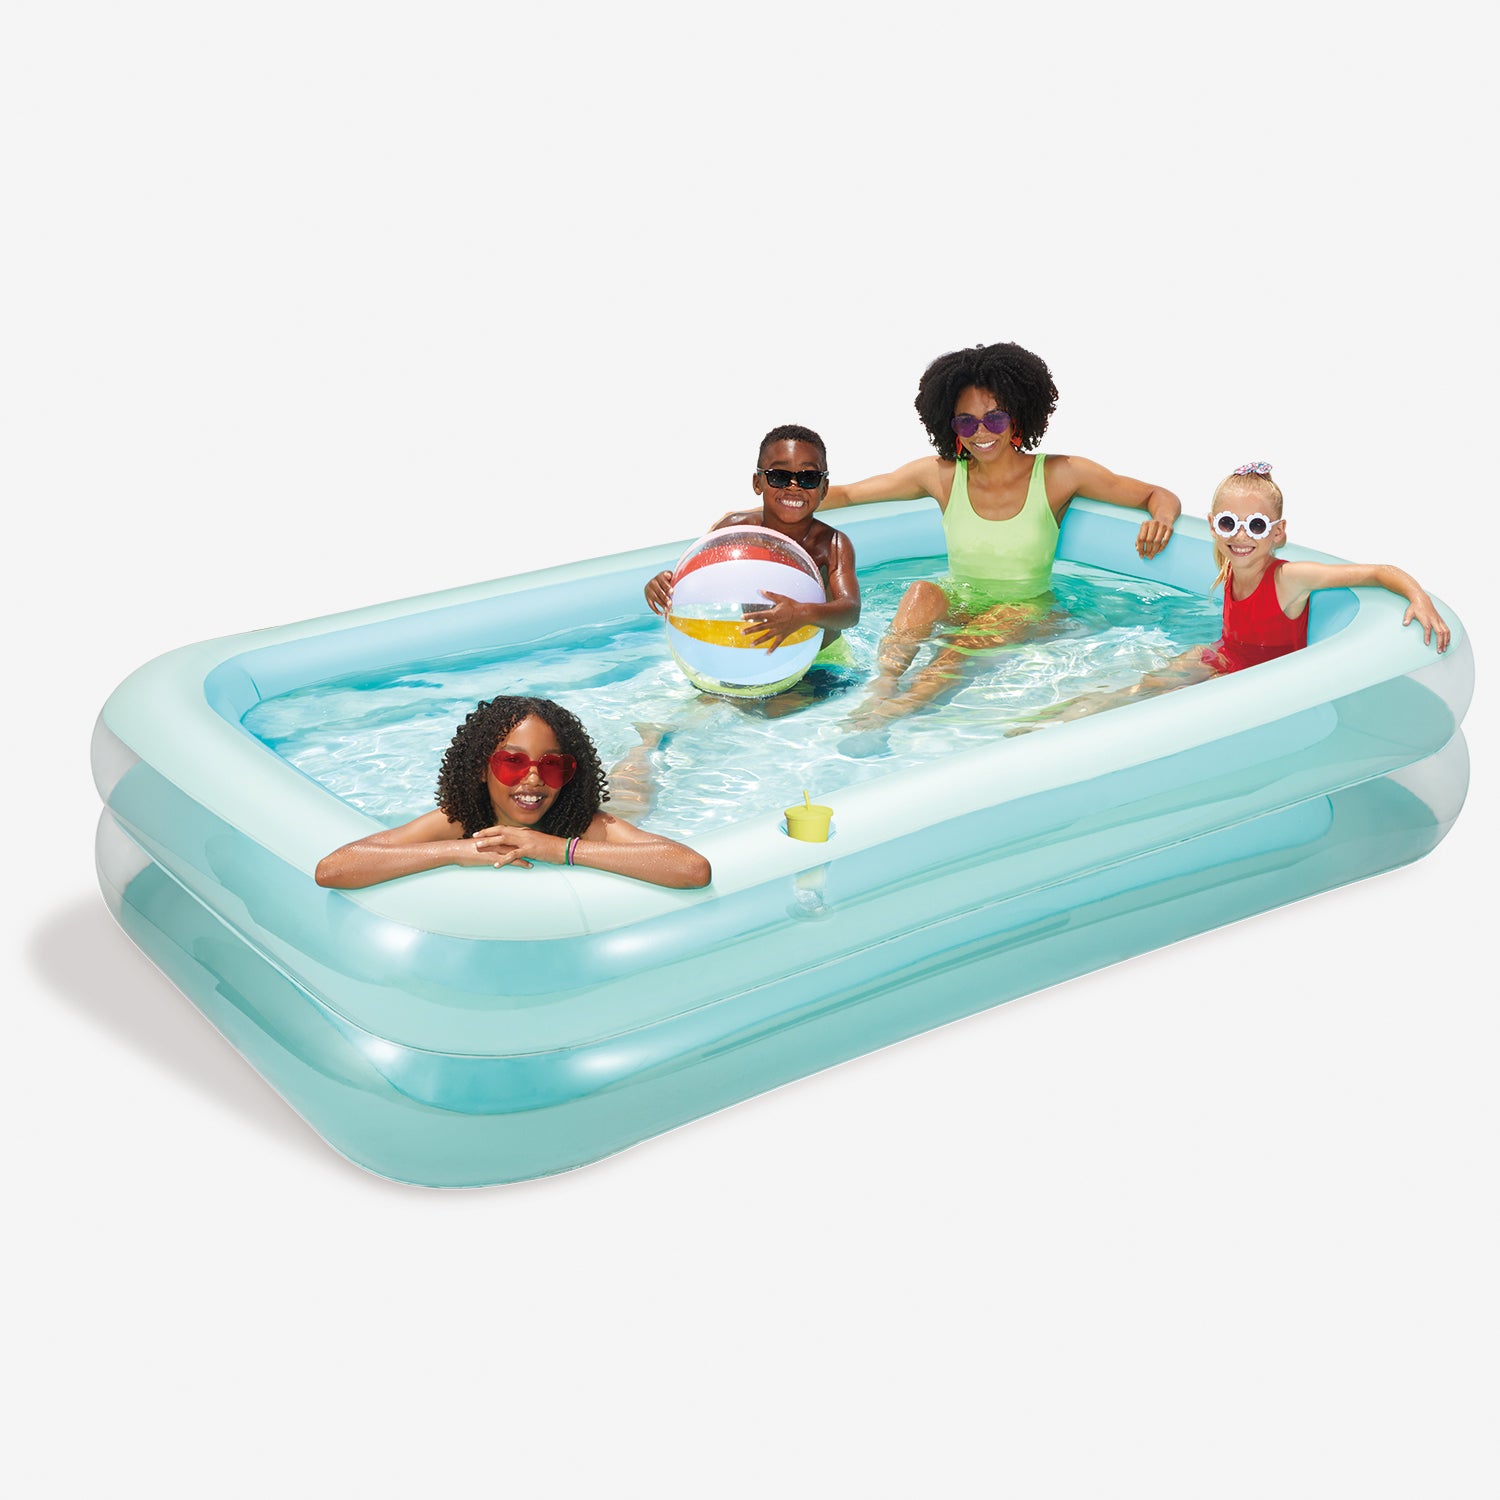 Funsicle SummerBlock Pool with models